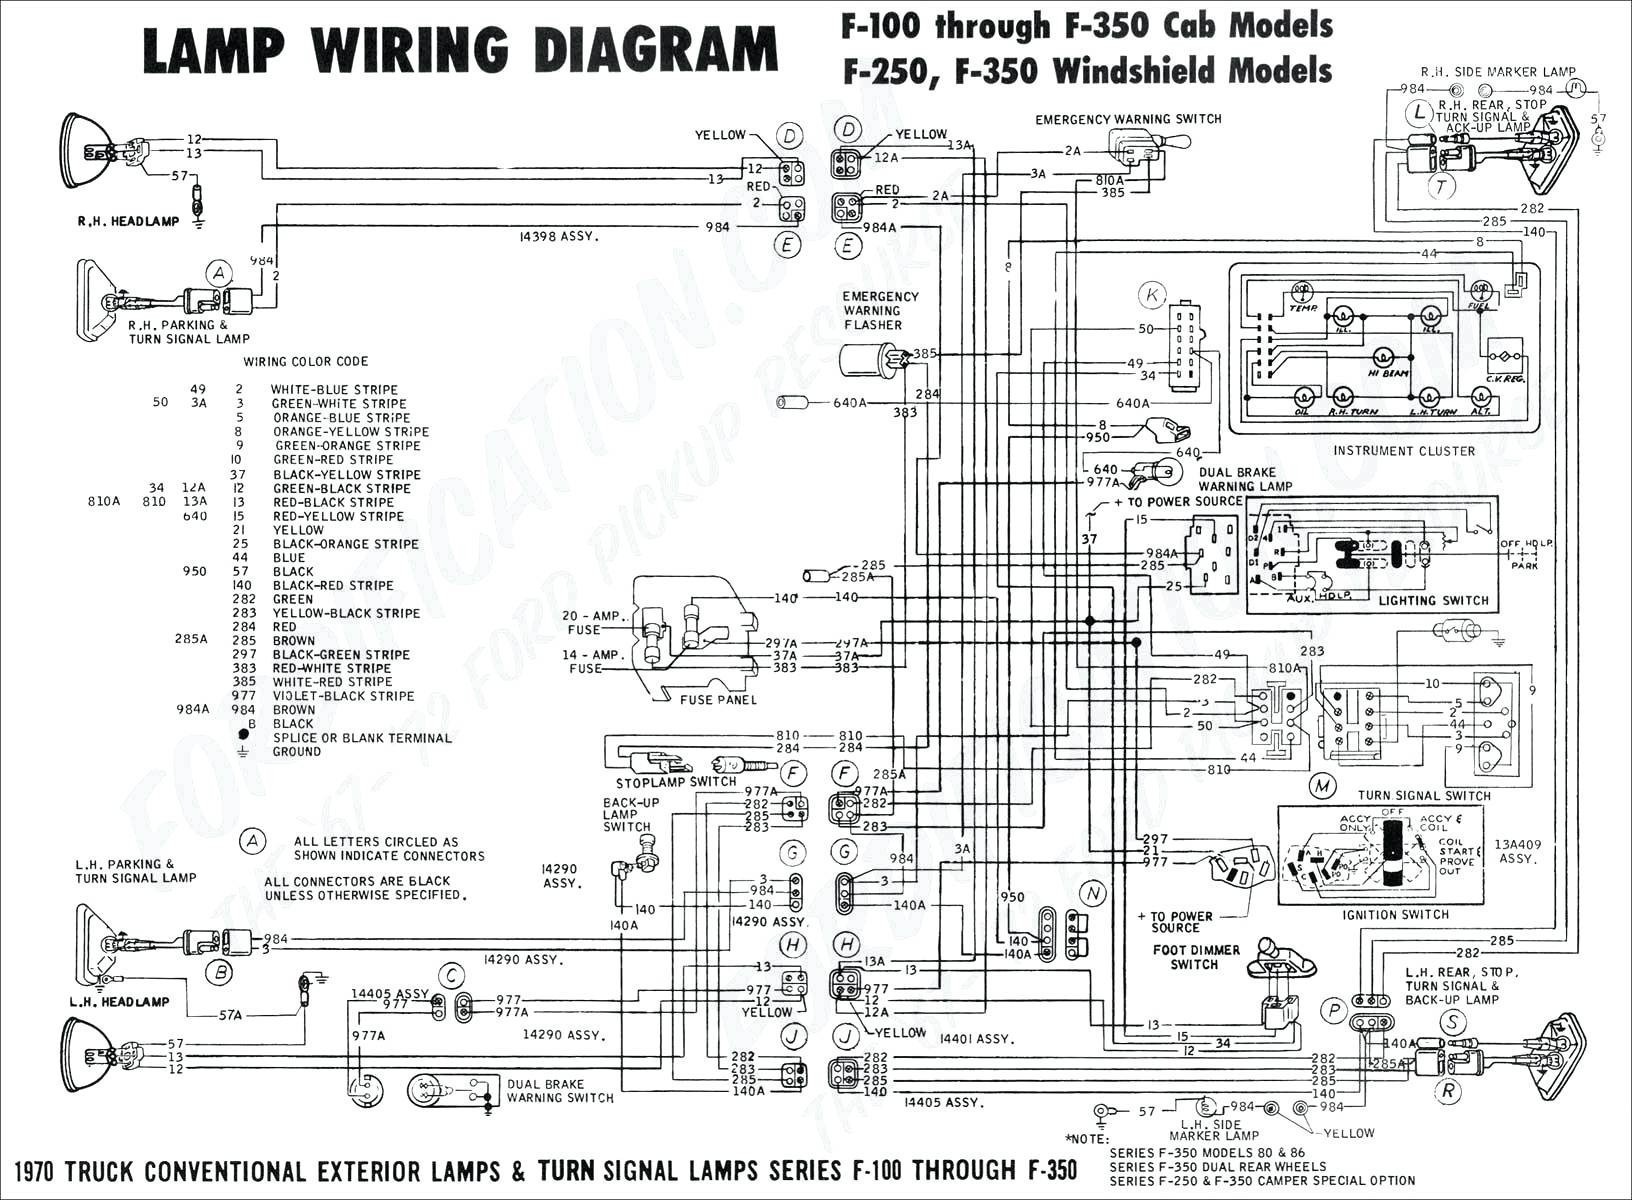 Wiring Up A Trailer Diagram Save Mitsubishi Trailer Wiring Diagram Fresh Save Coachman Motorhome